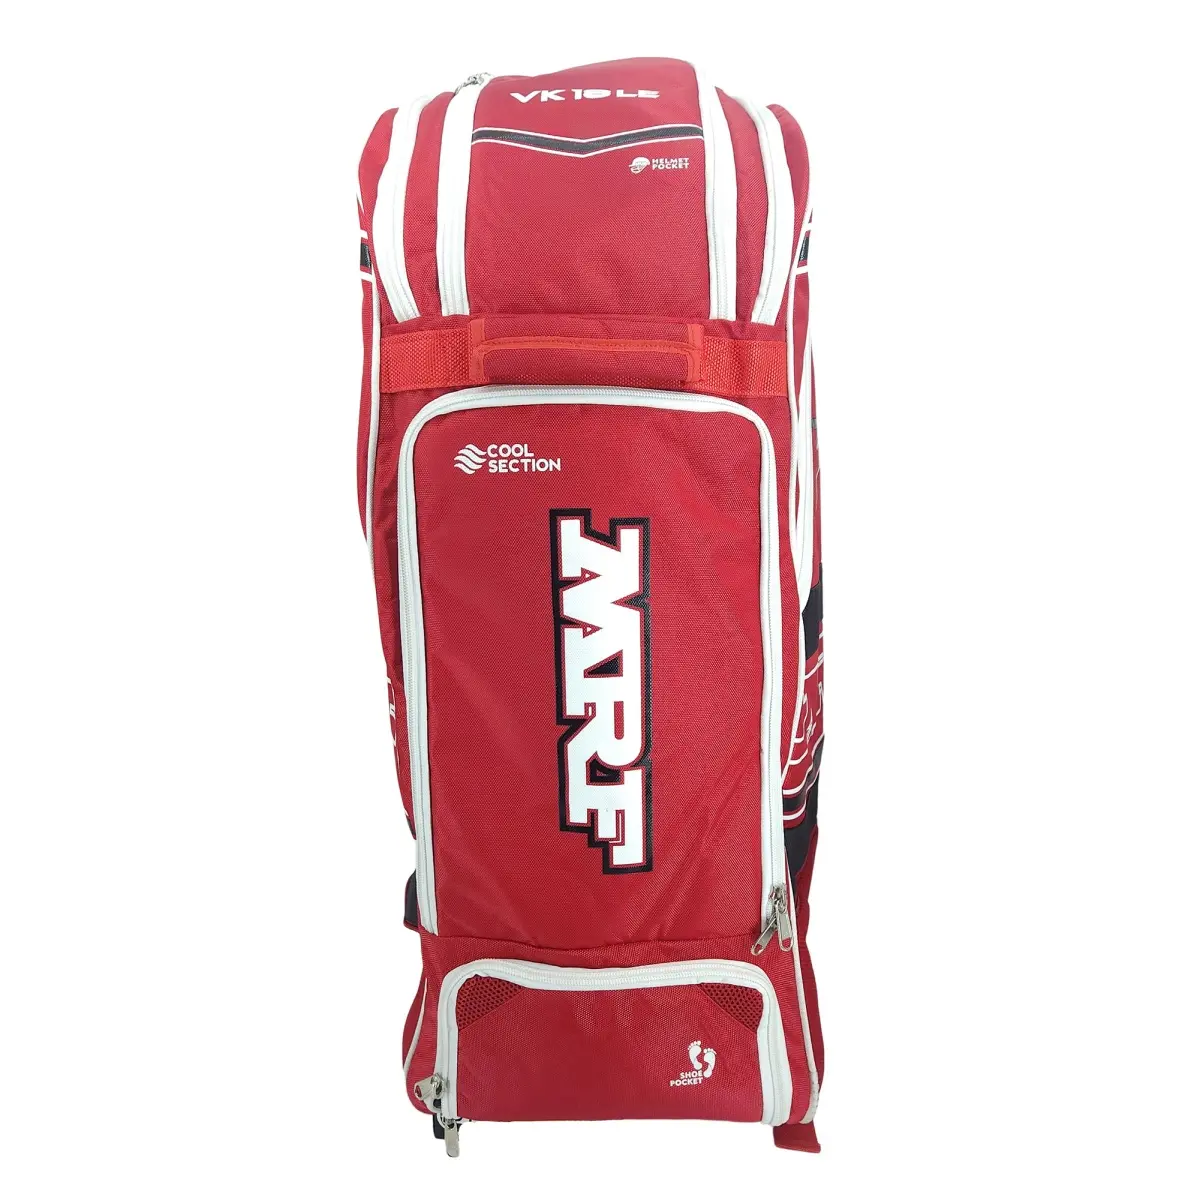 MRF Warrior Cricket Kit Bag - Wheelie - Large – WHACK Sports